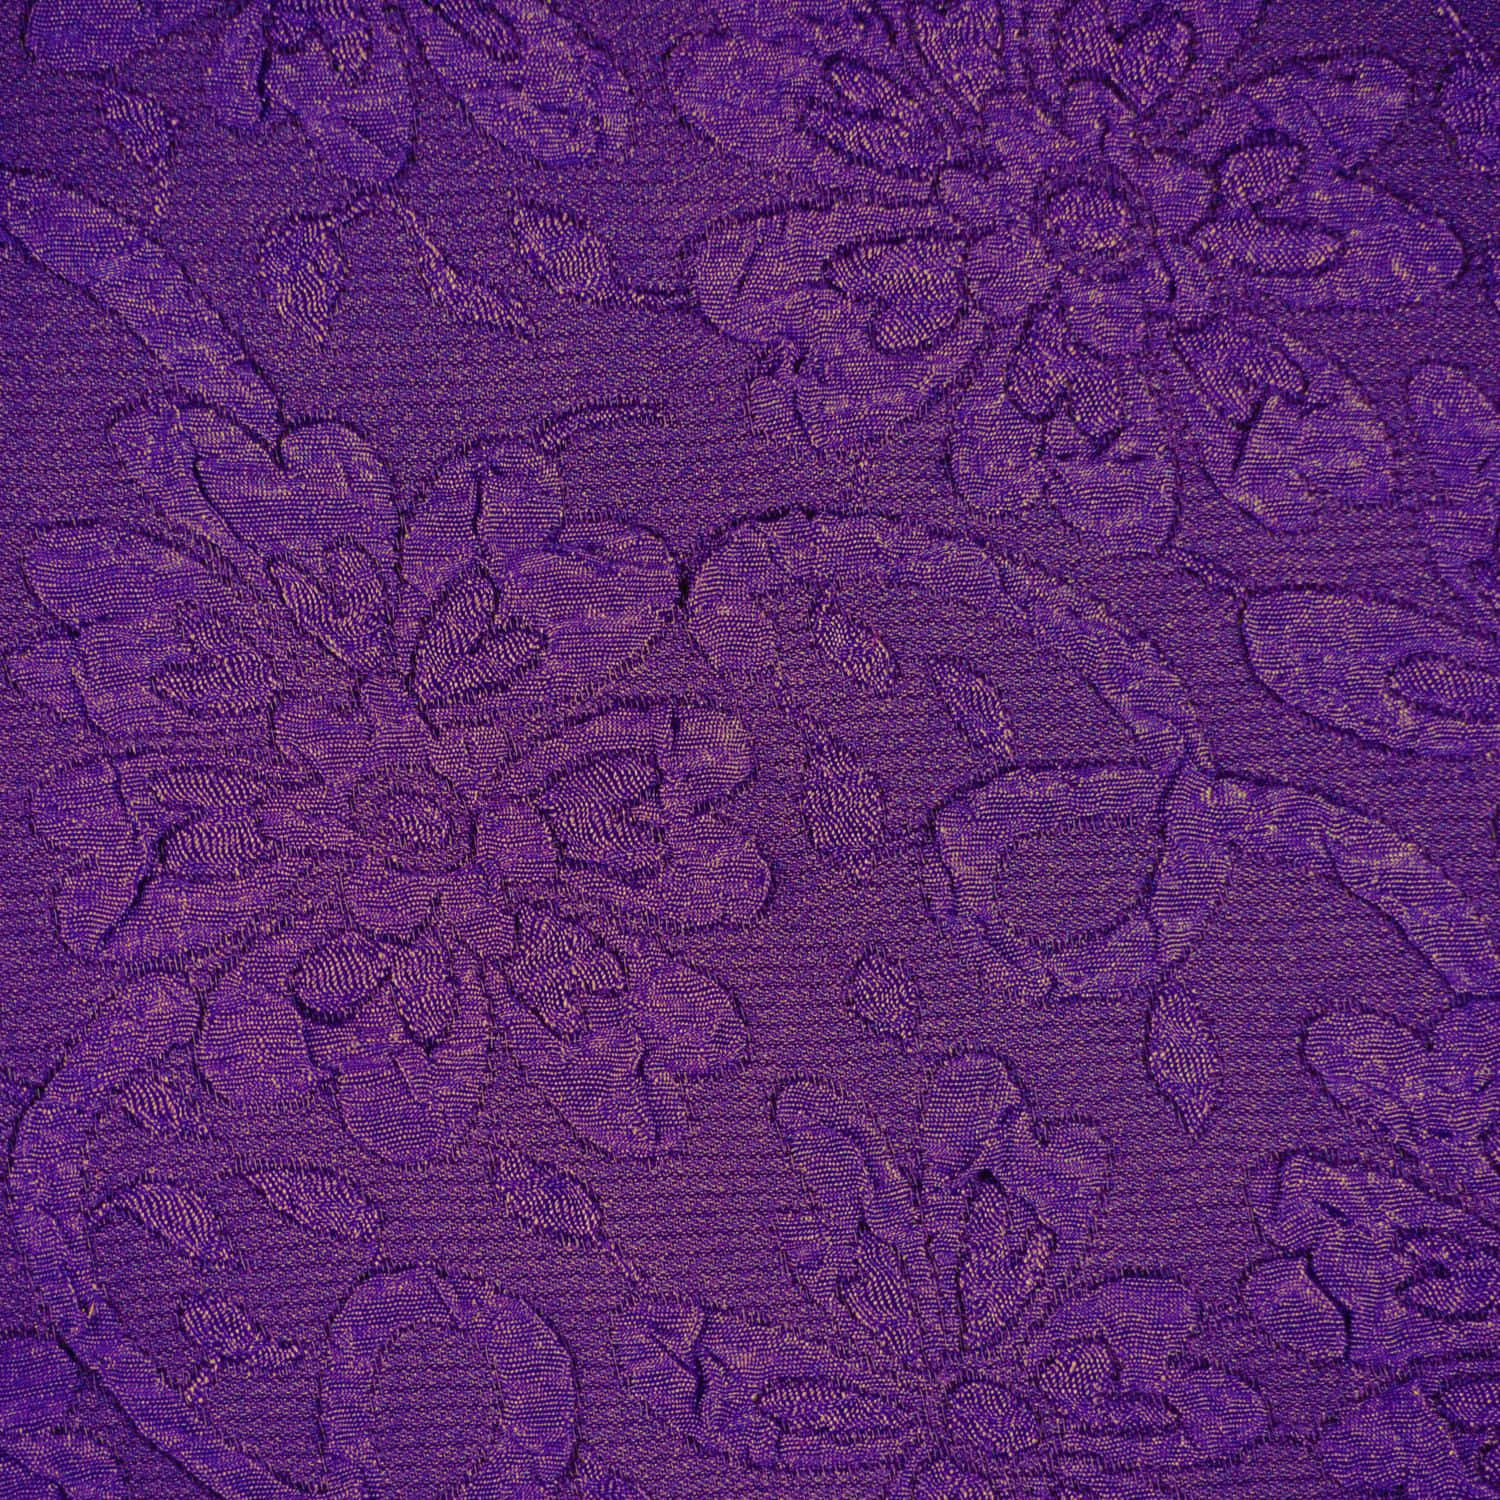 Lavish Luxury - Dive into the deep purple velvet of this sumptuous satin fabric Wallpaper